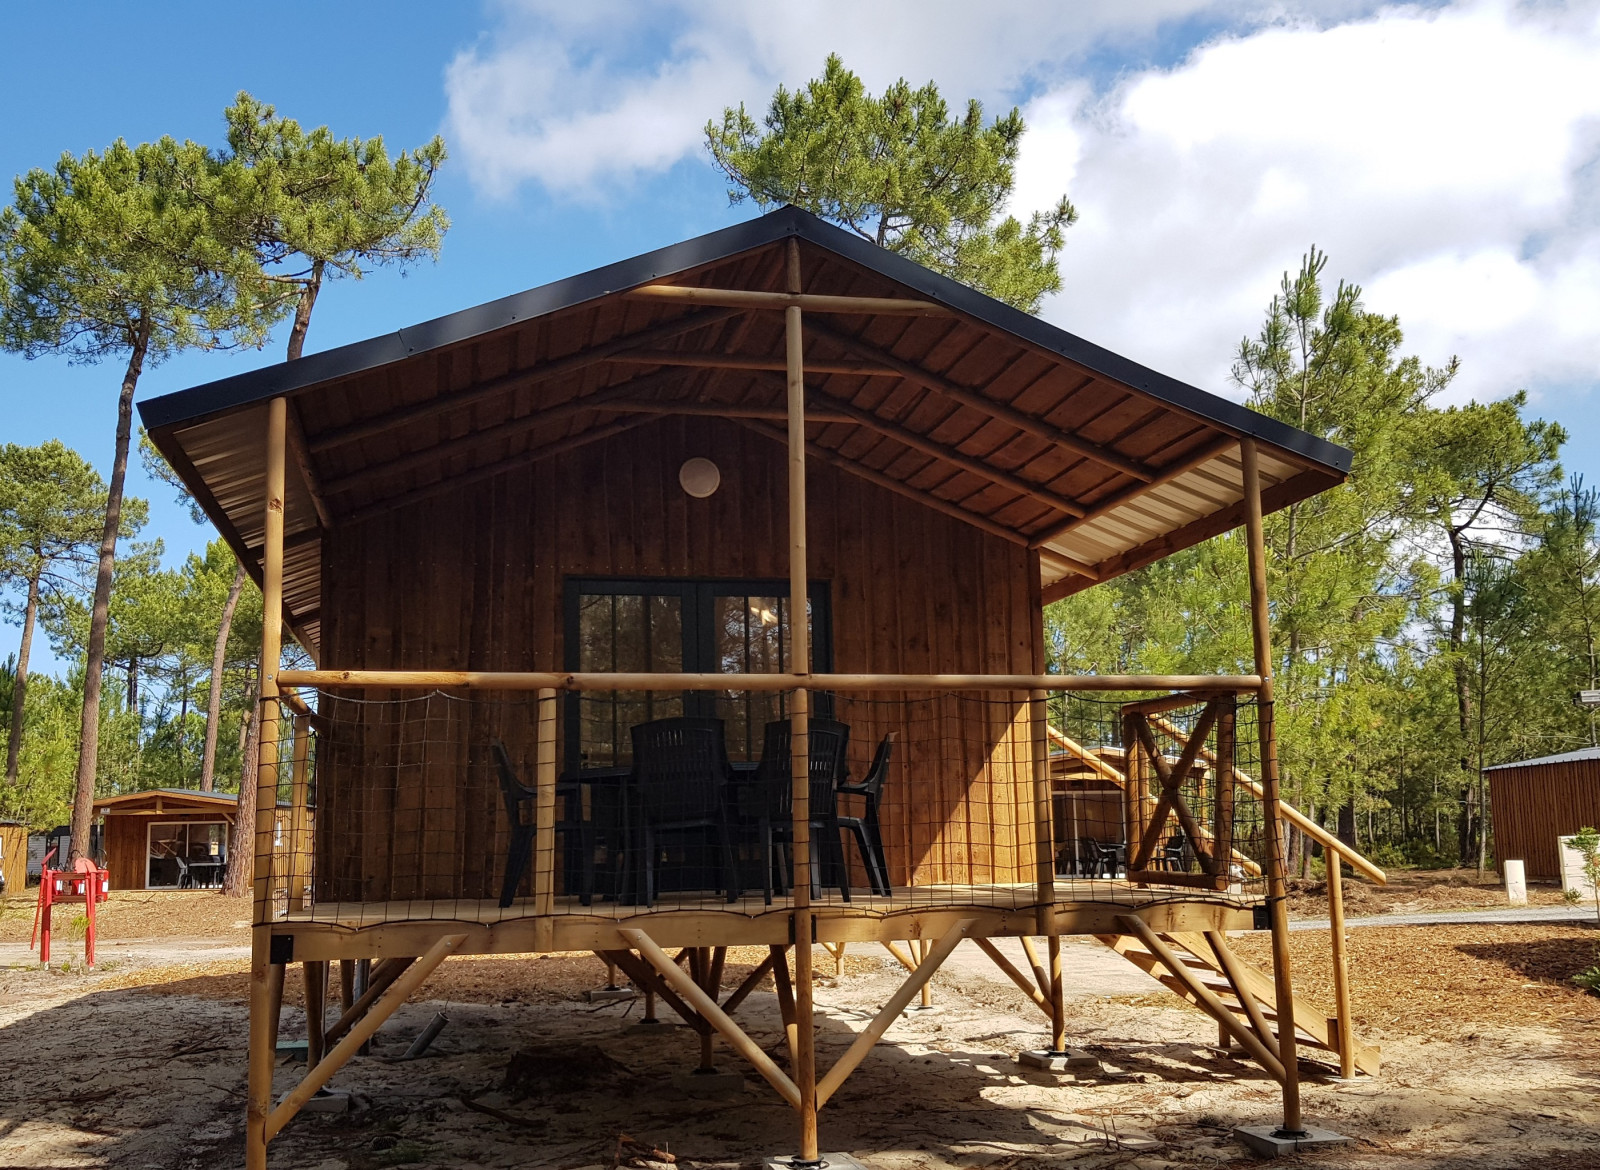 The accommodations, La Grande Cabane